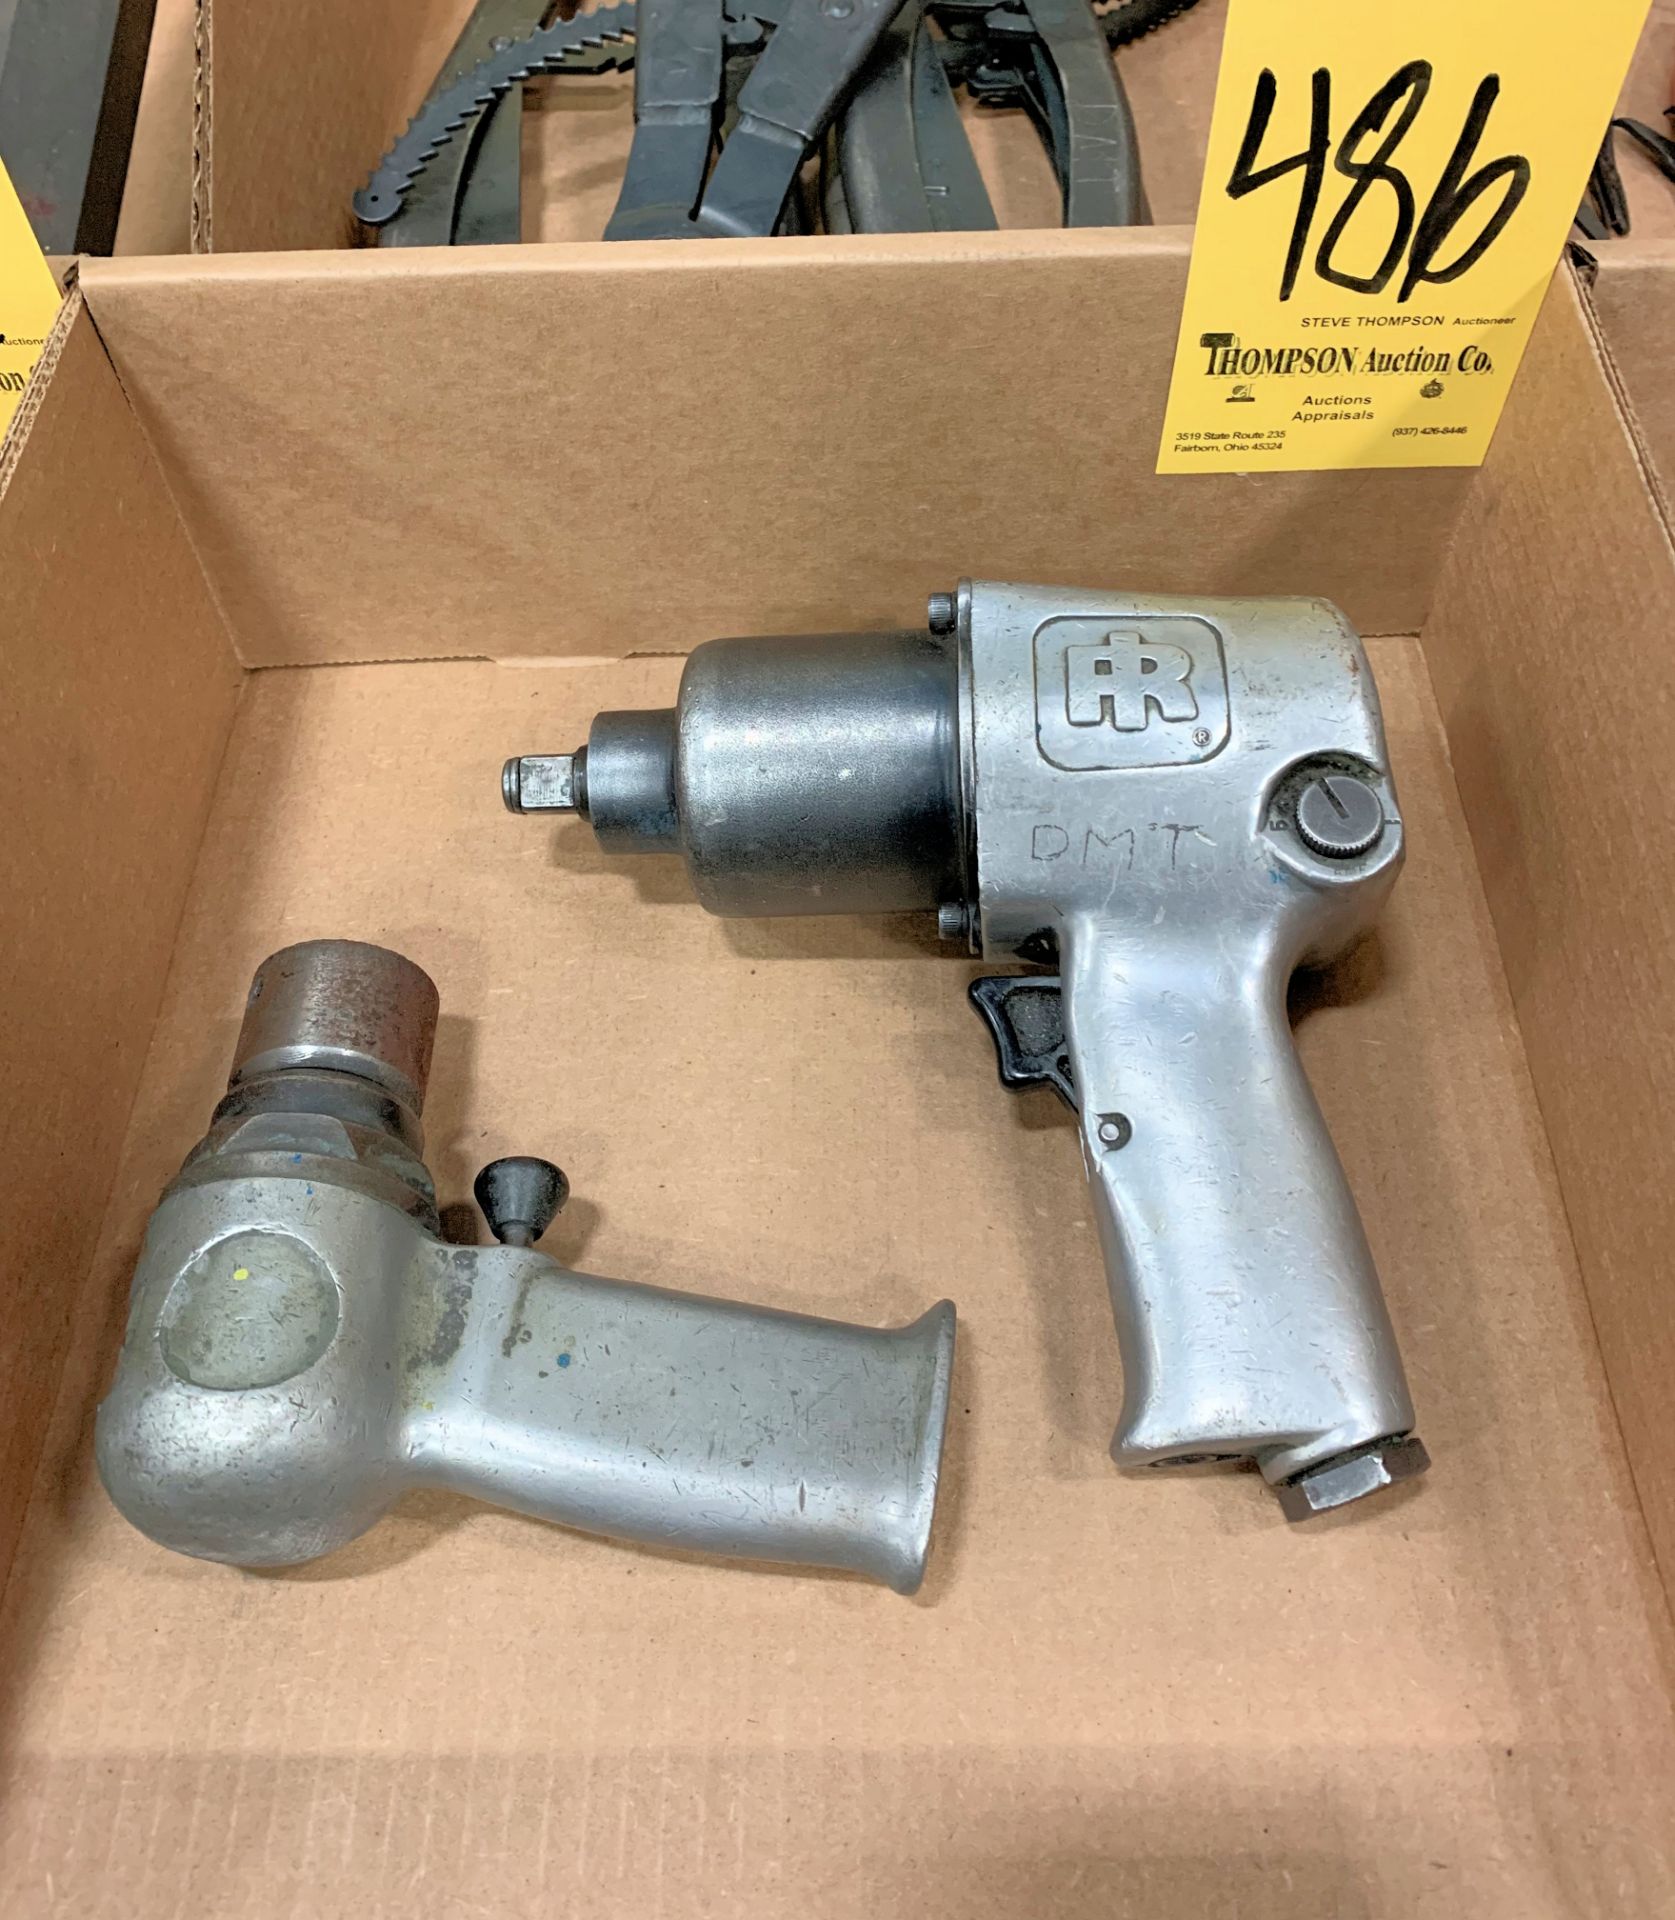 Lot-(1) Ingersoll-Rand 1/2" Pneumatic Impact Gun and (1) No Name Pneumatic Driver Gun in (1) Box